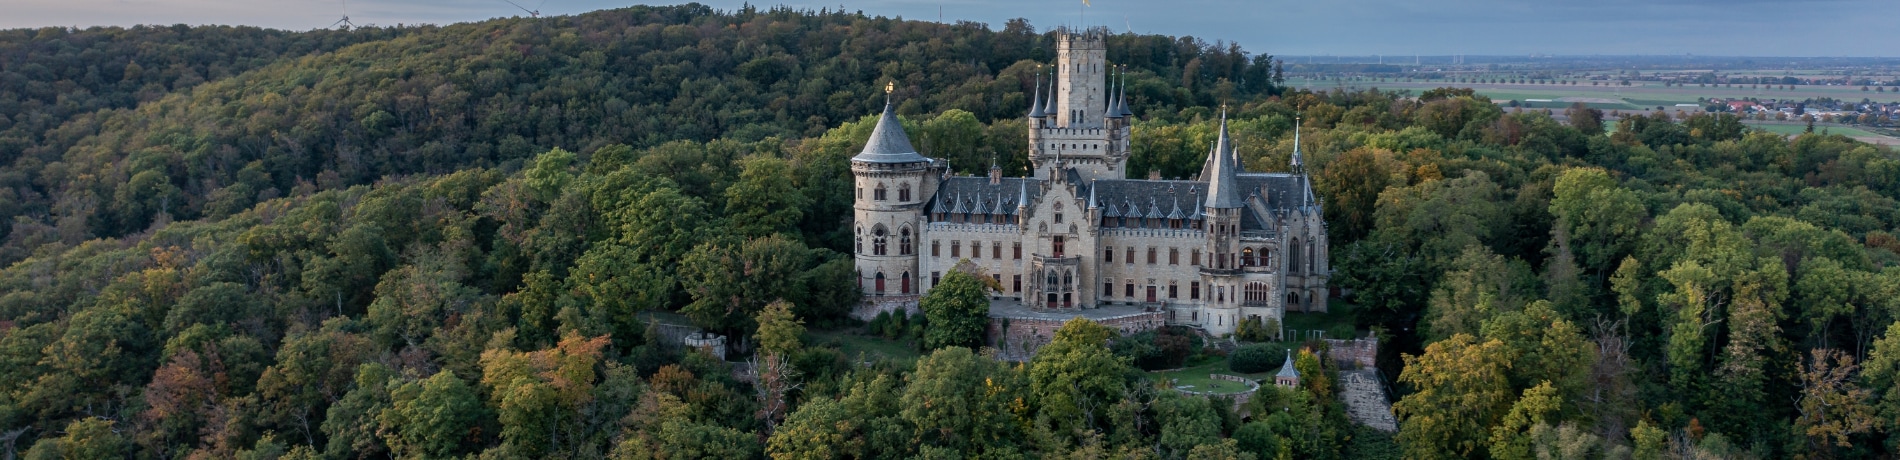 Castello di Marienburg, Bassa Sassonia, Germania | Eden Viaggi